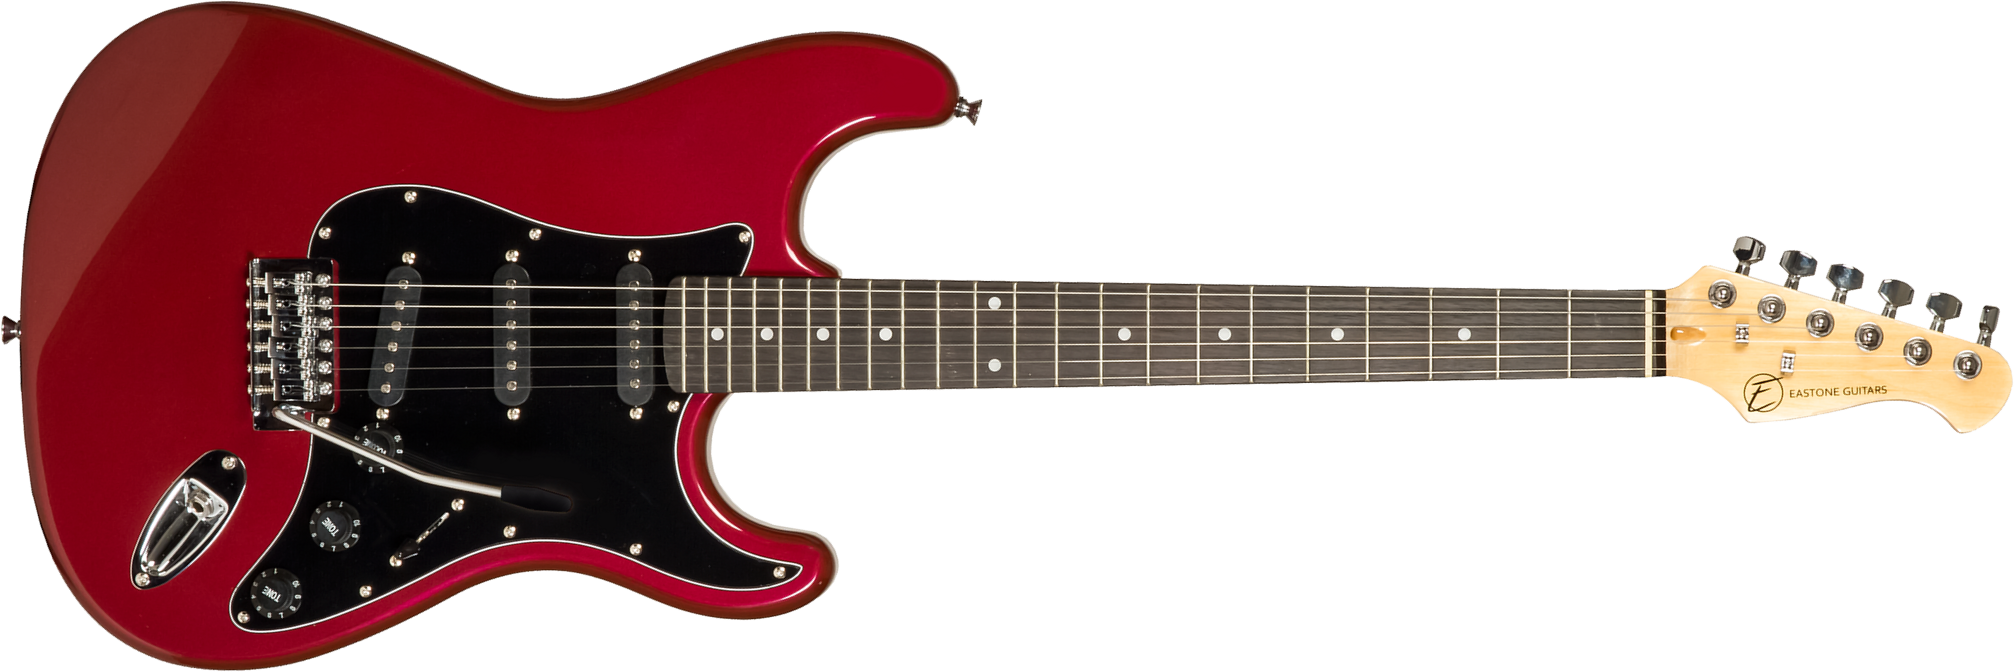 Eastone Str70t 3s Trem Pur - Dark Red - Str shape electric guitar - Main picture